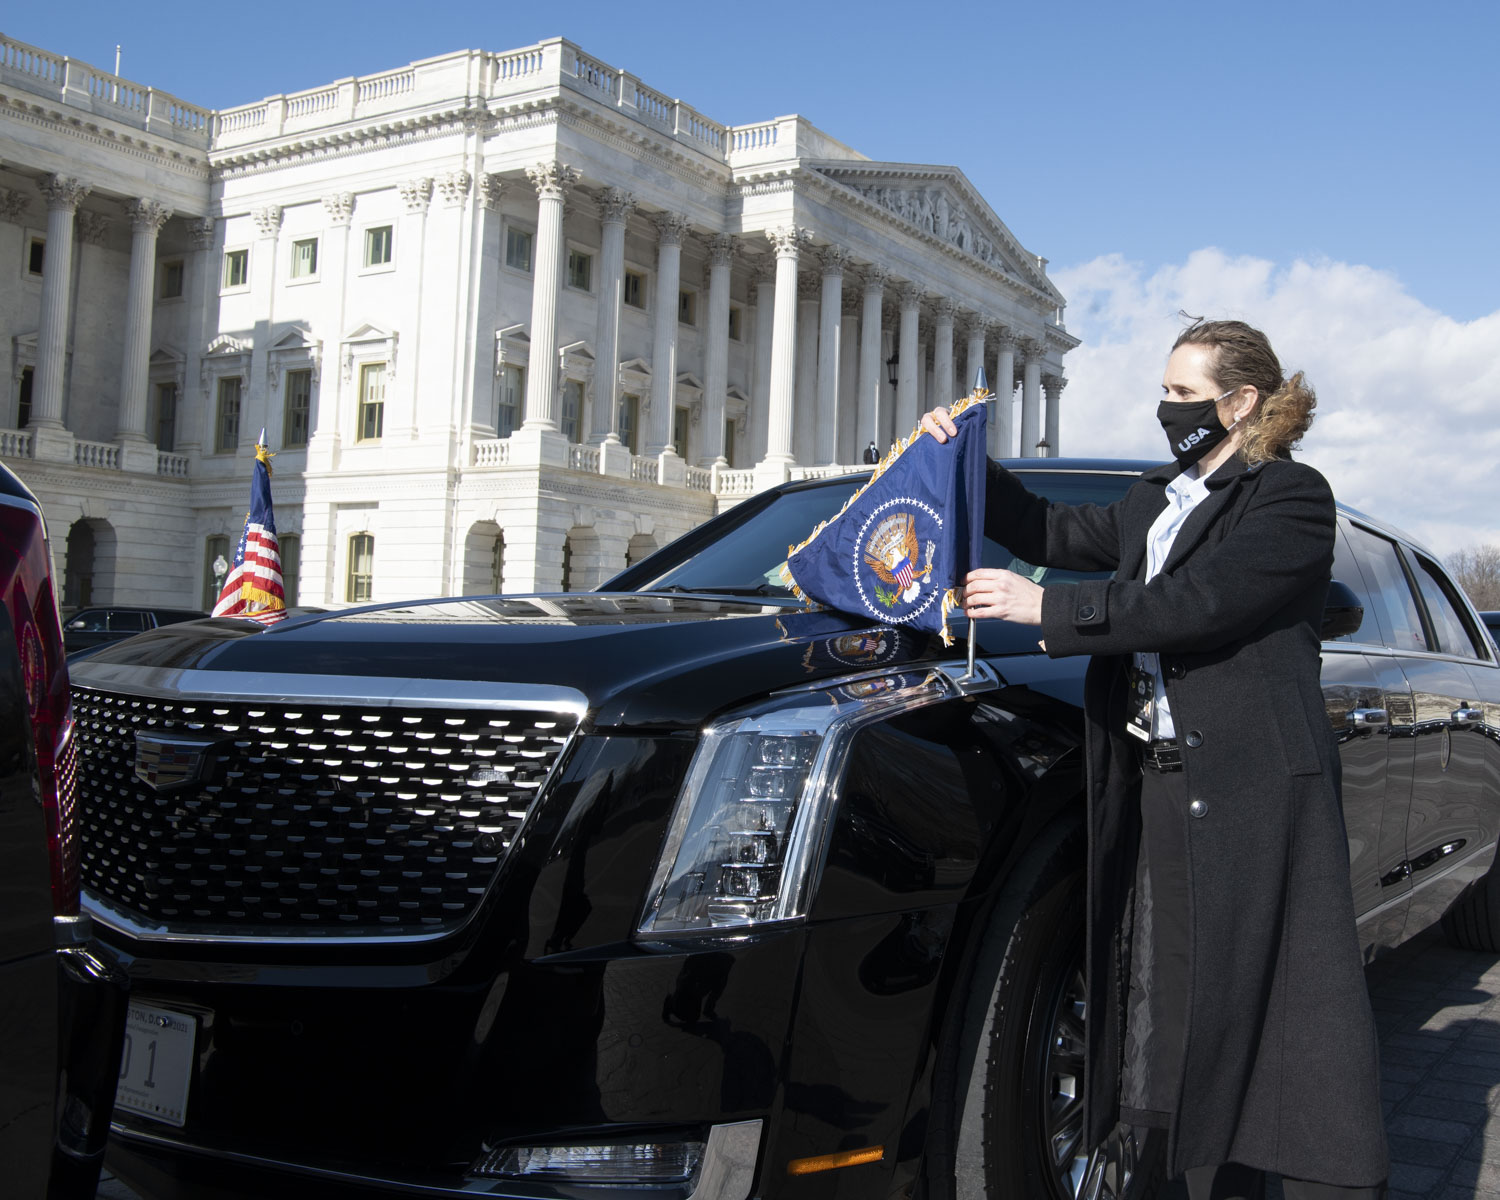 Secret Service Special Agent adjusting flag on a presidential vehicle